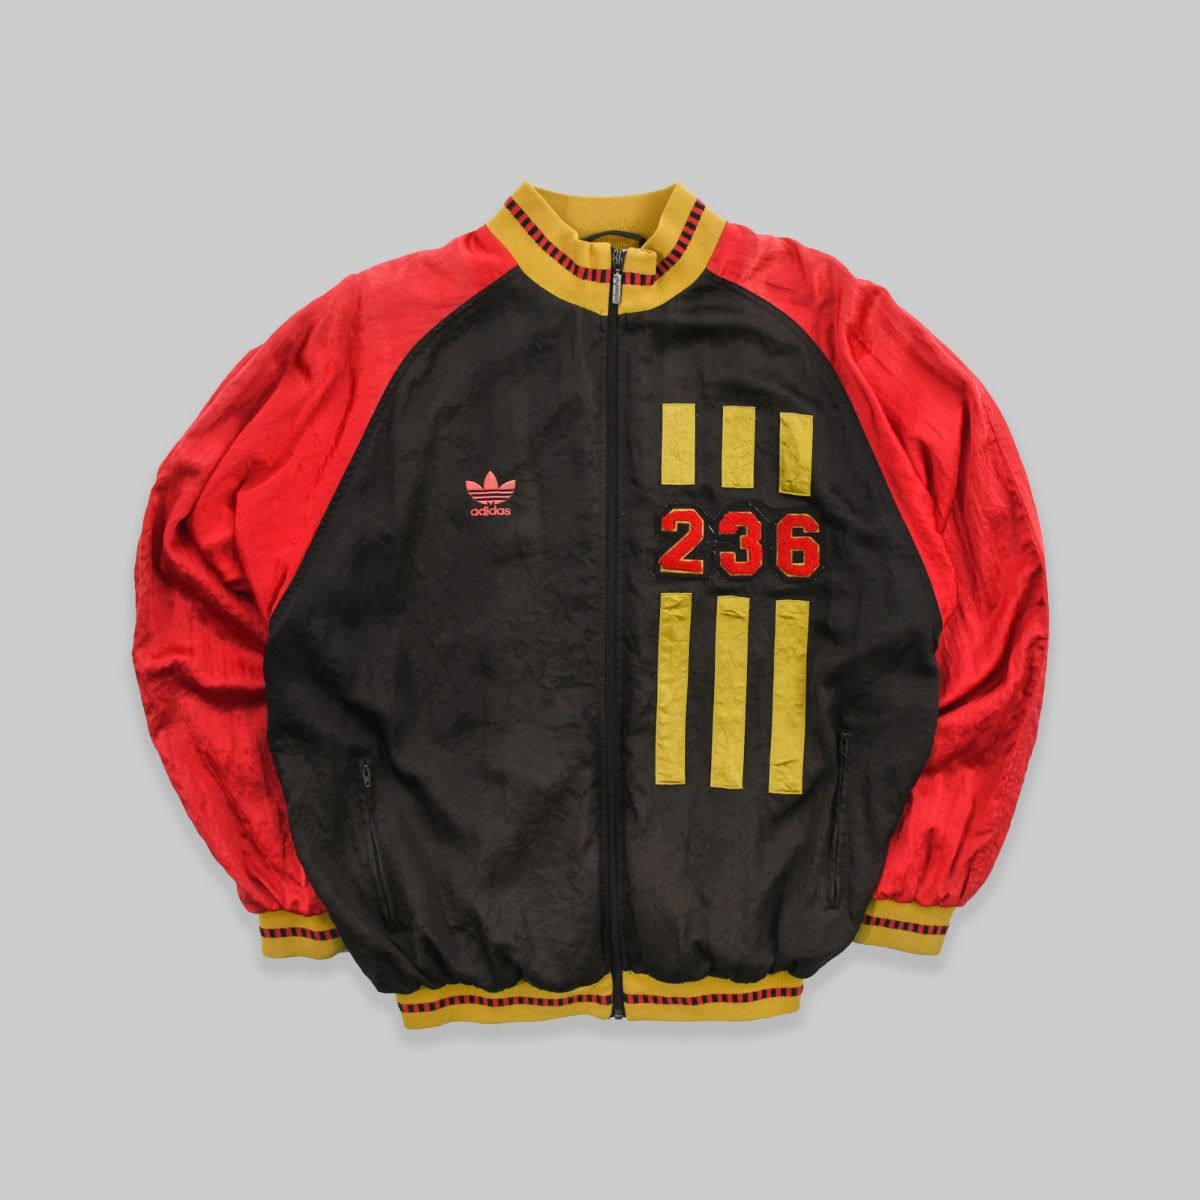 Adidas Late 1980s 236 Shell Jacket